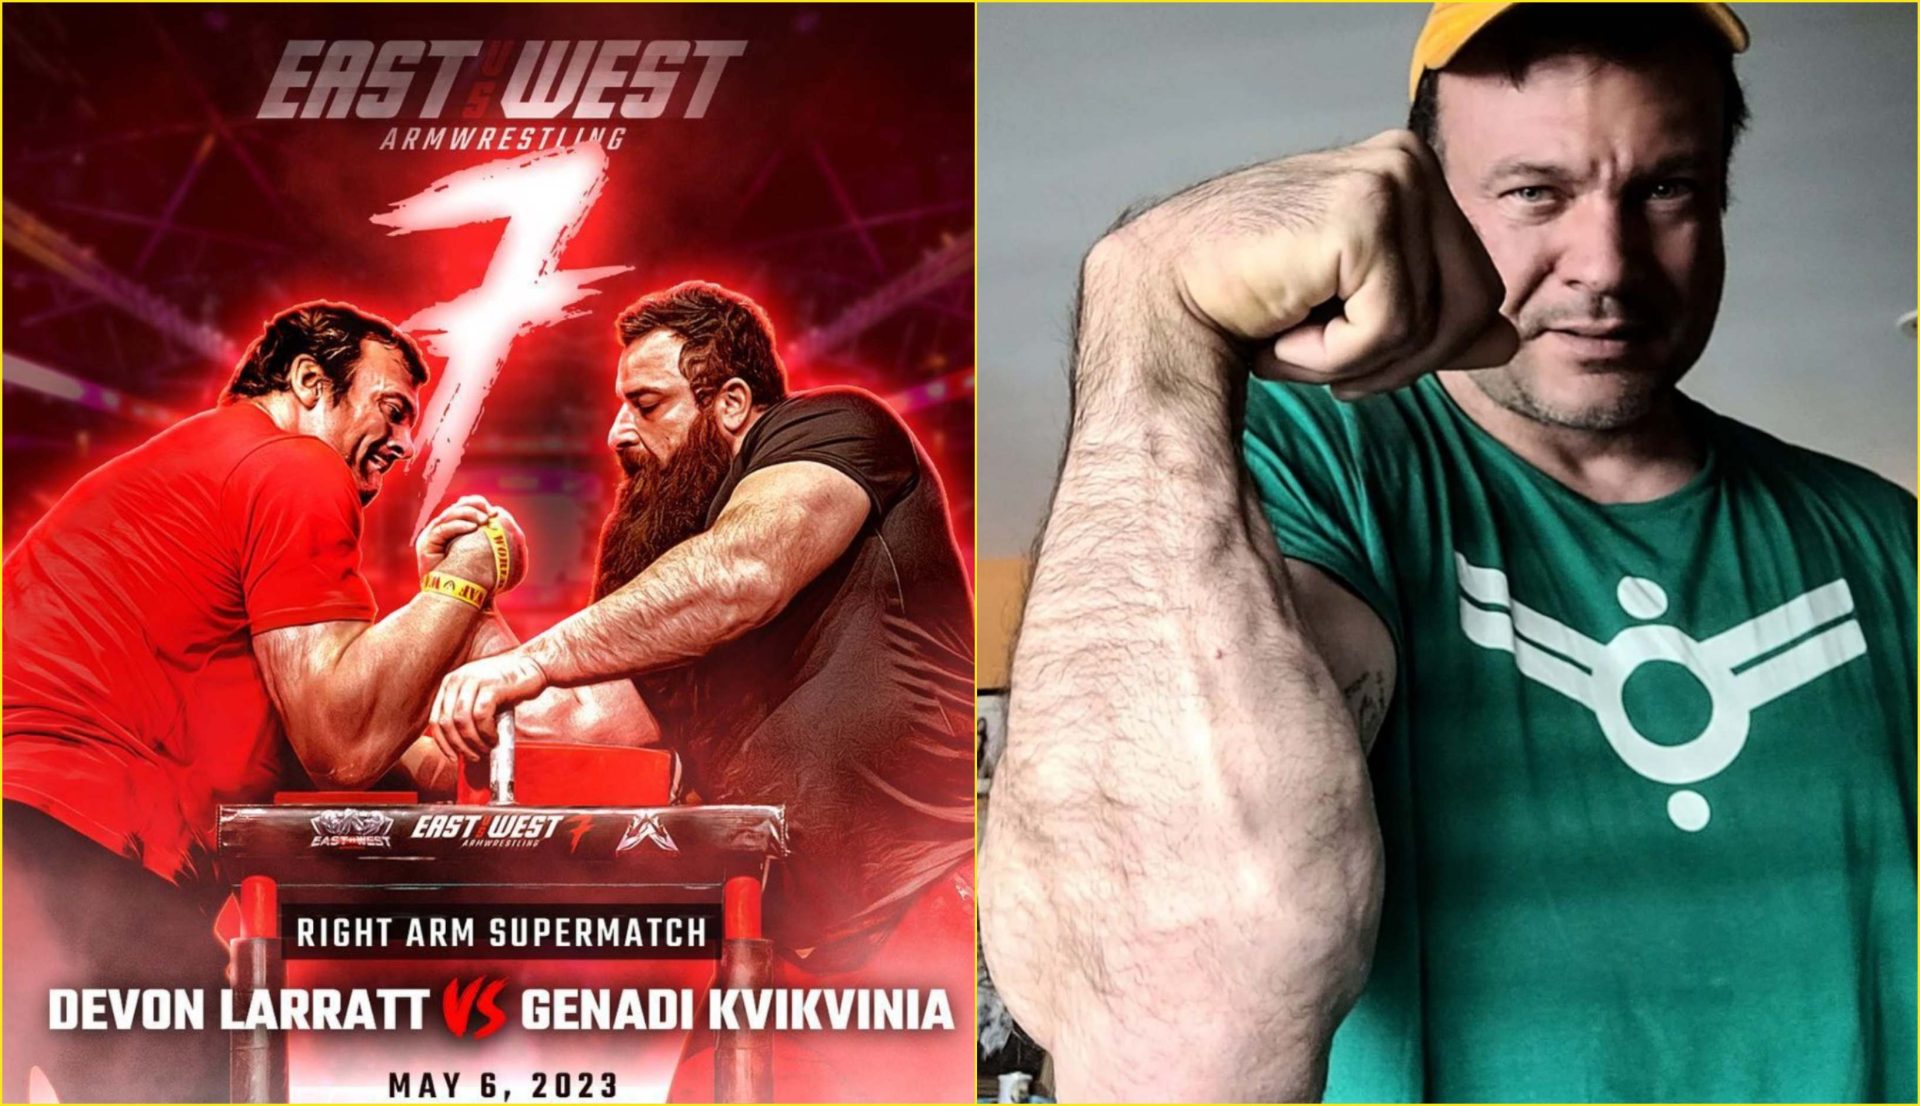 East Vs West 7: Everything You Need To Know About Devon Larratt vs. Gennadi Kvikvinia